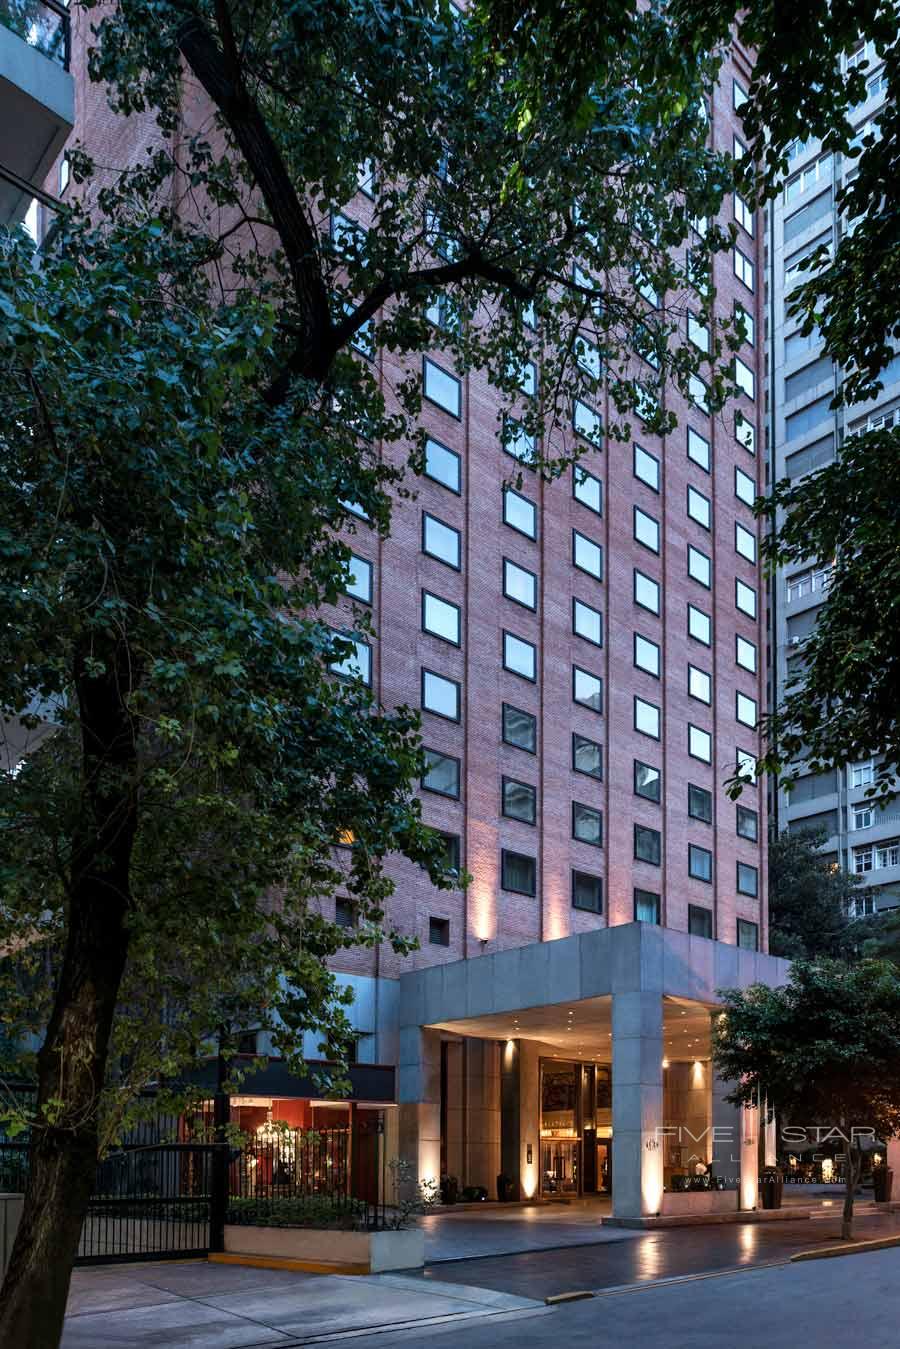 The Brick Hotel Buenos Aires, Argentina